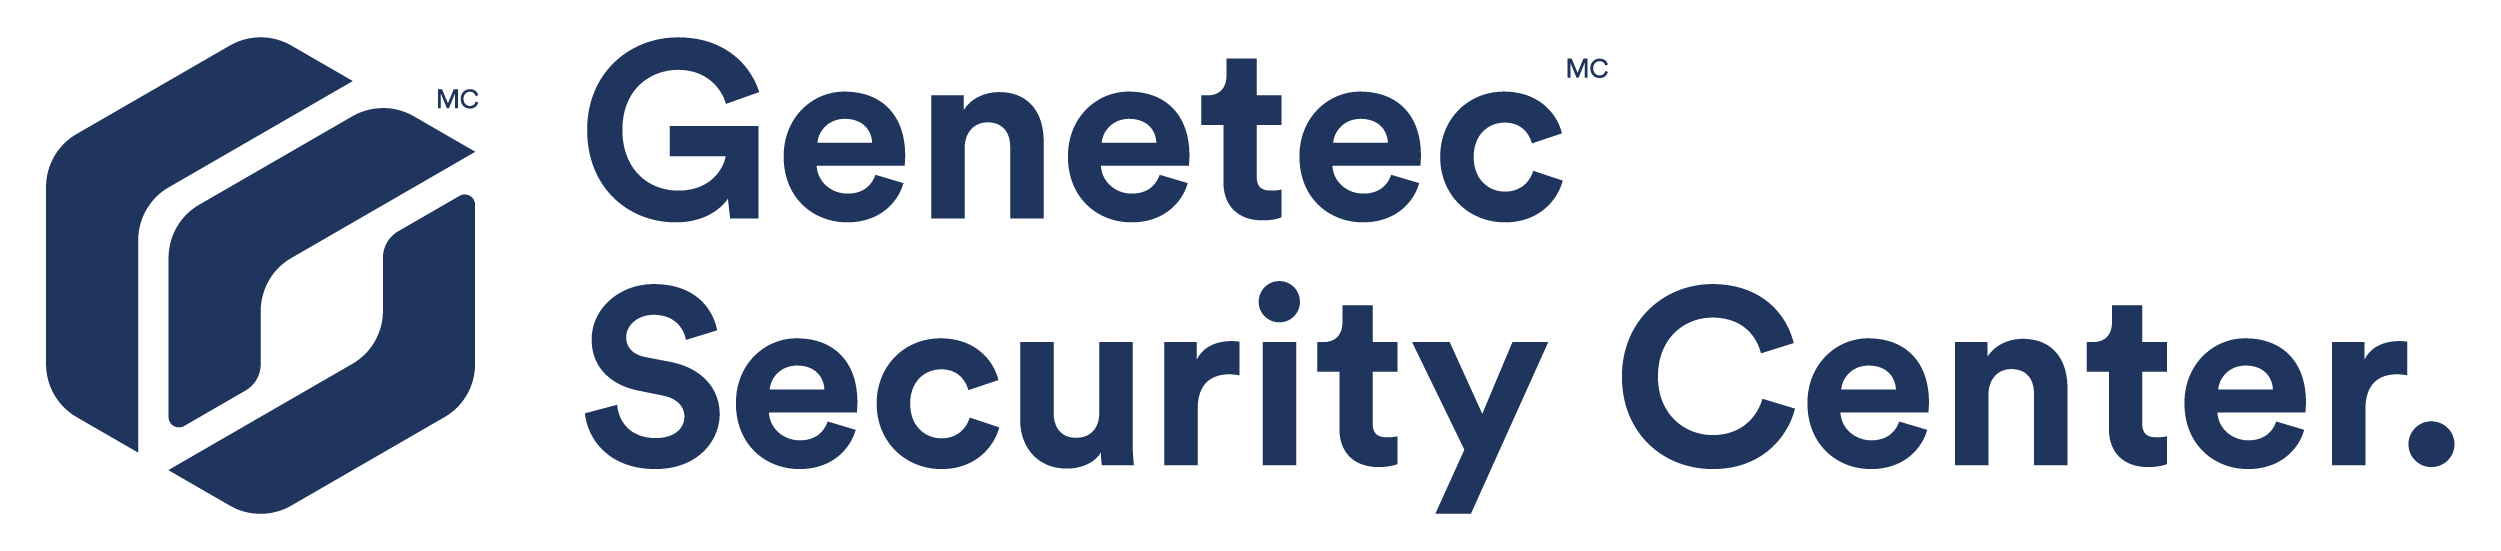 Security Center Logo